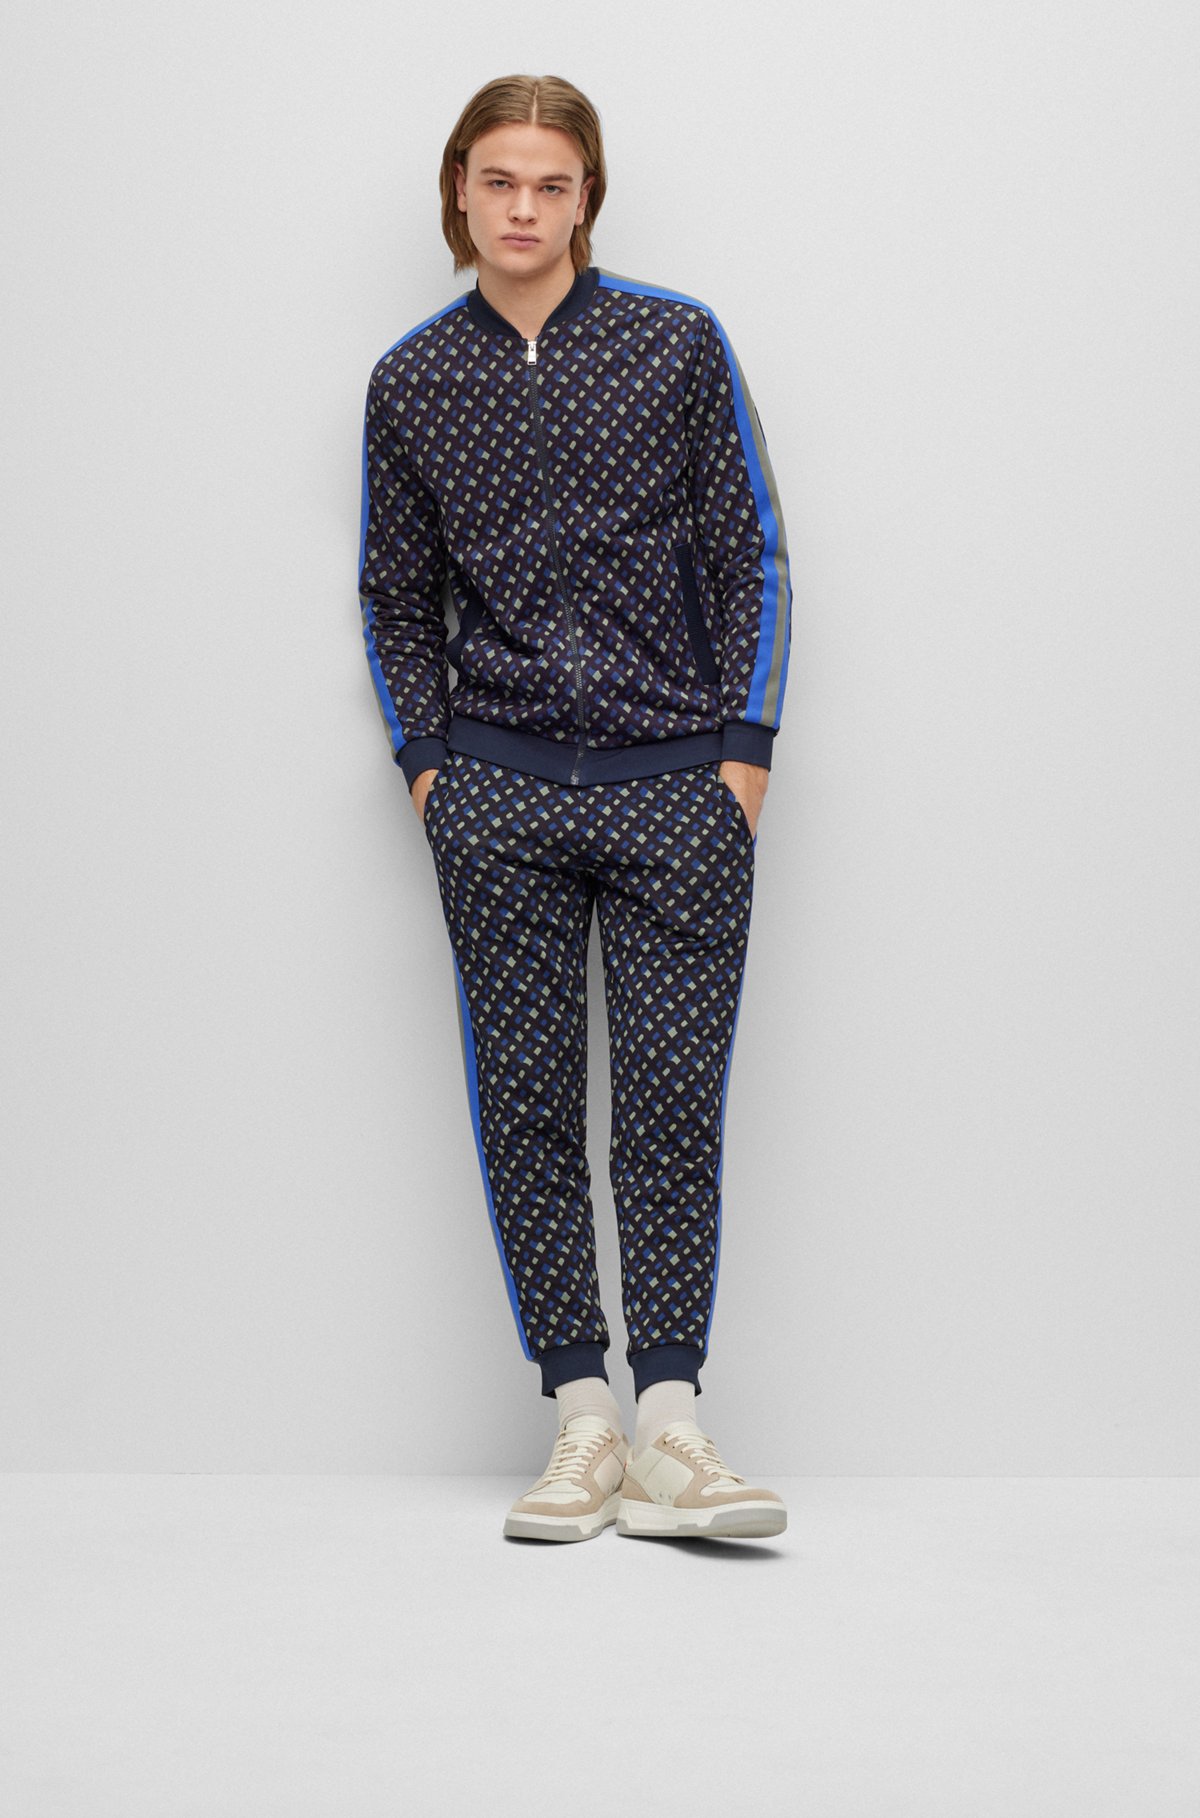 Louis Vuitton Monogram Sweatshirt REVIEW NEW 2019! 